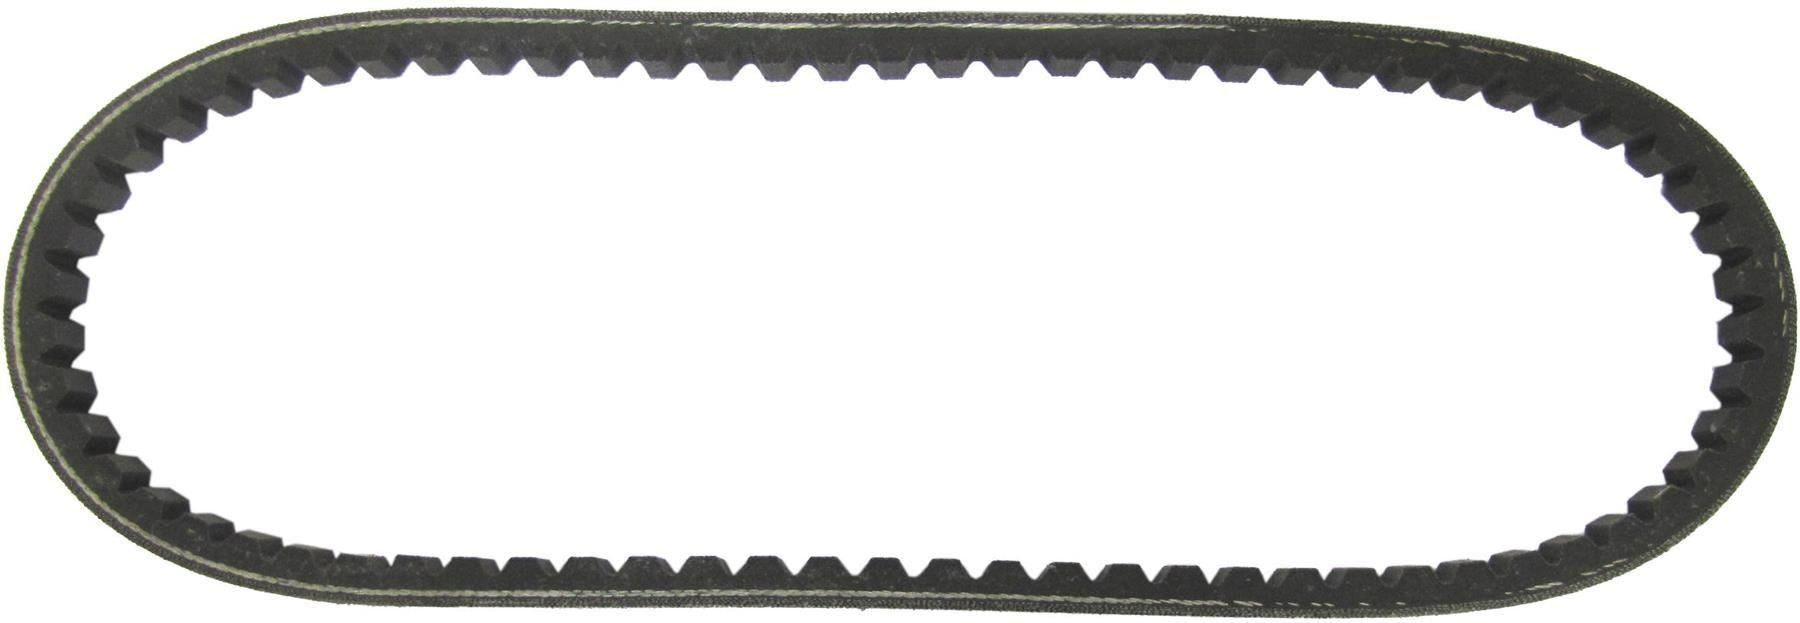 CPI GTR 50 2003-2001 Drive Belt